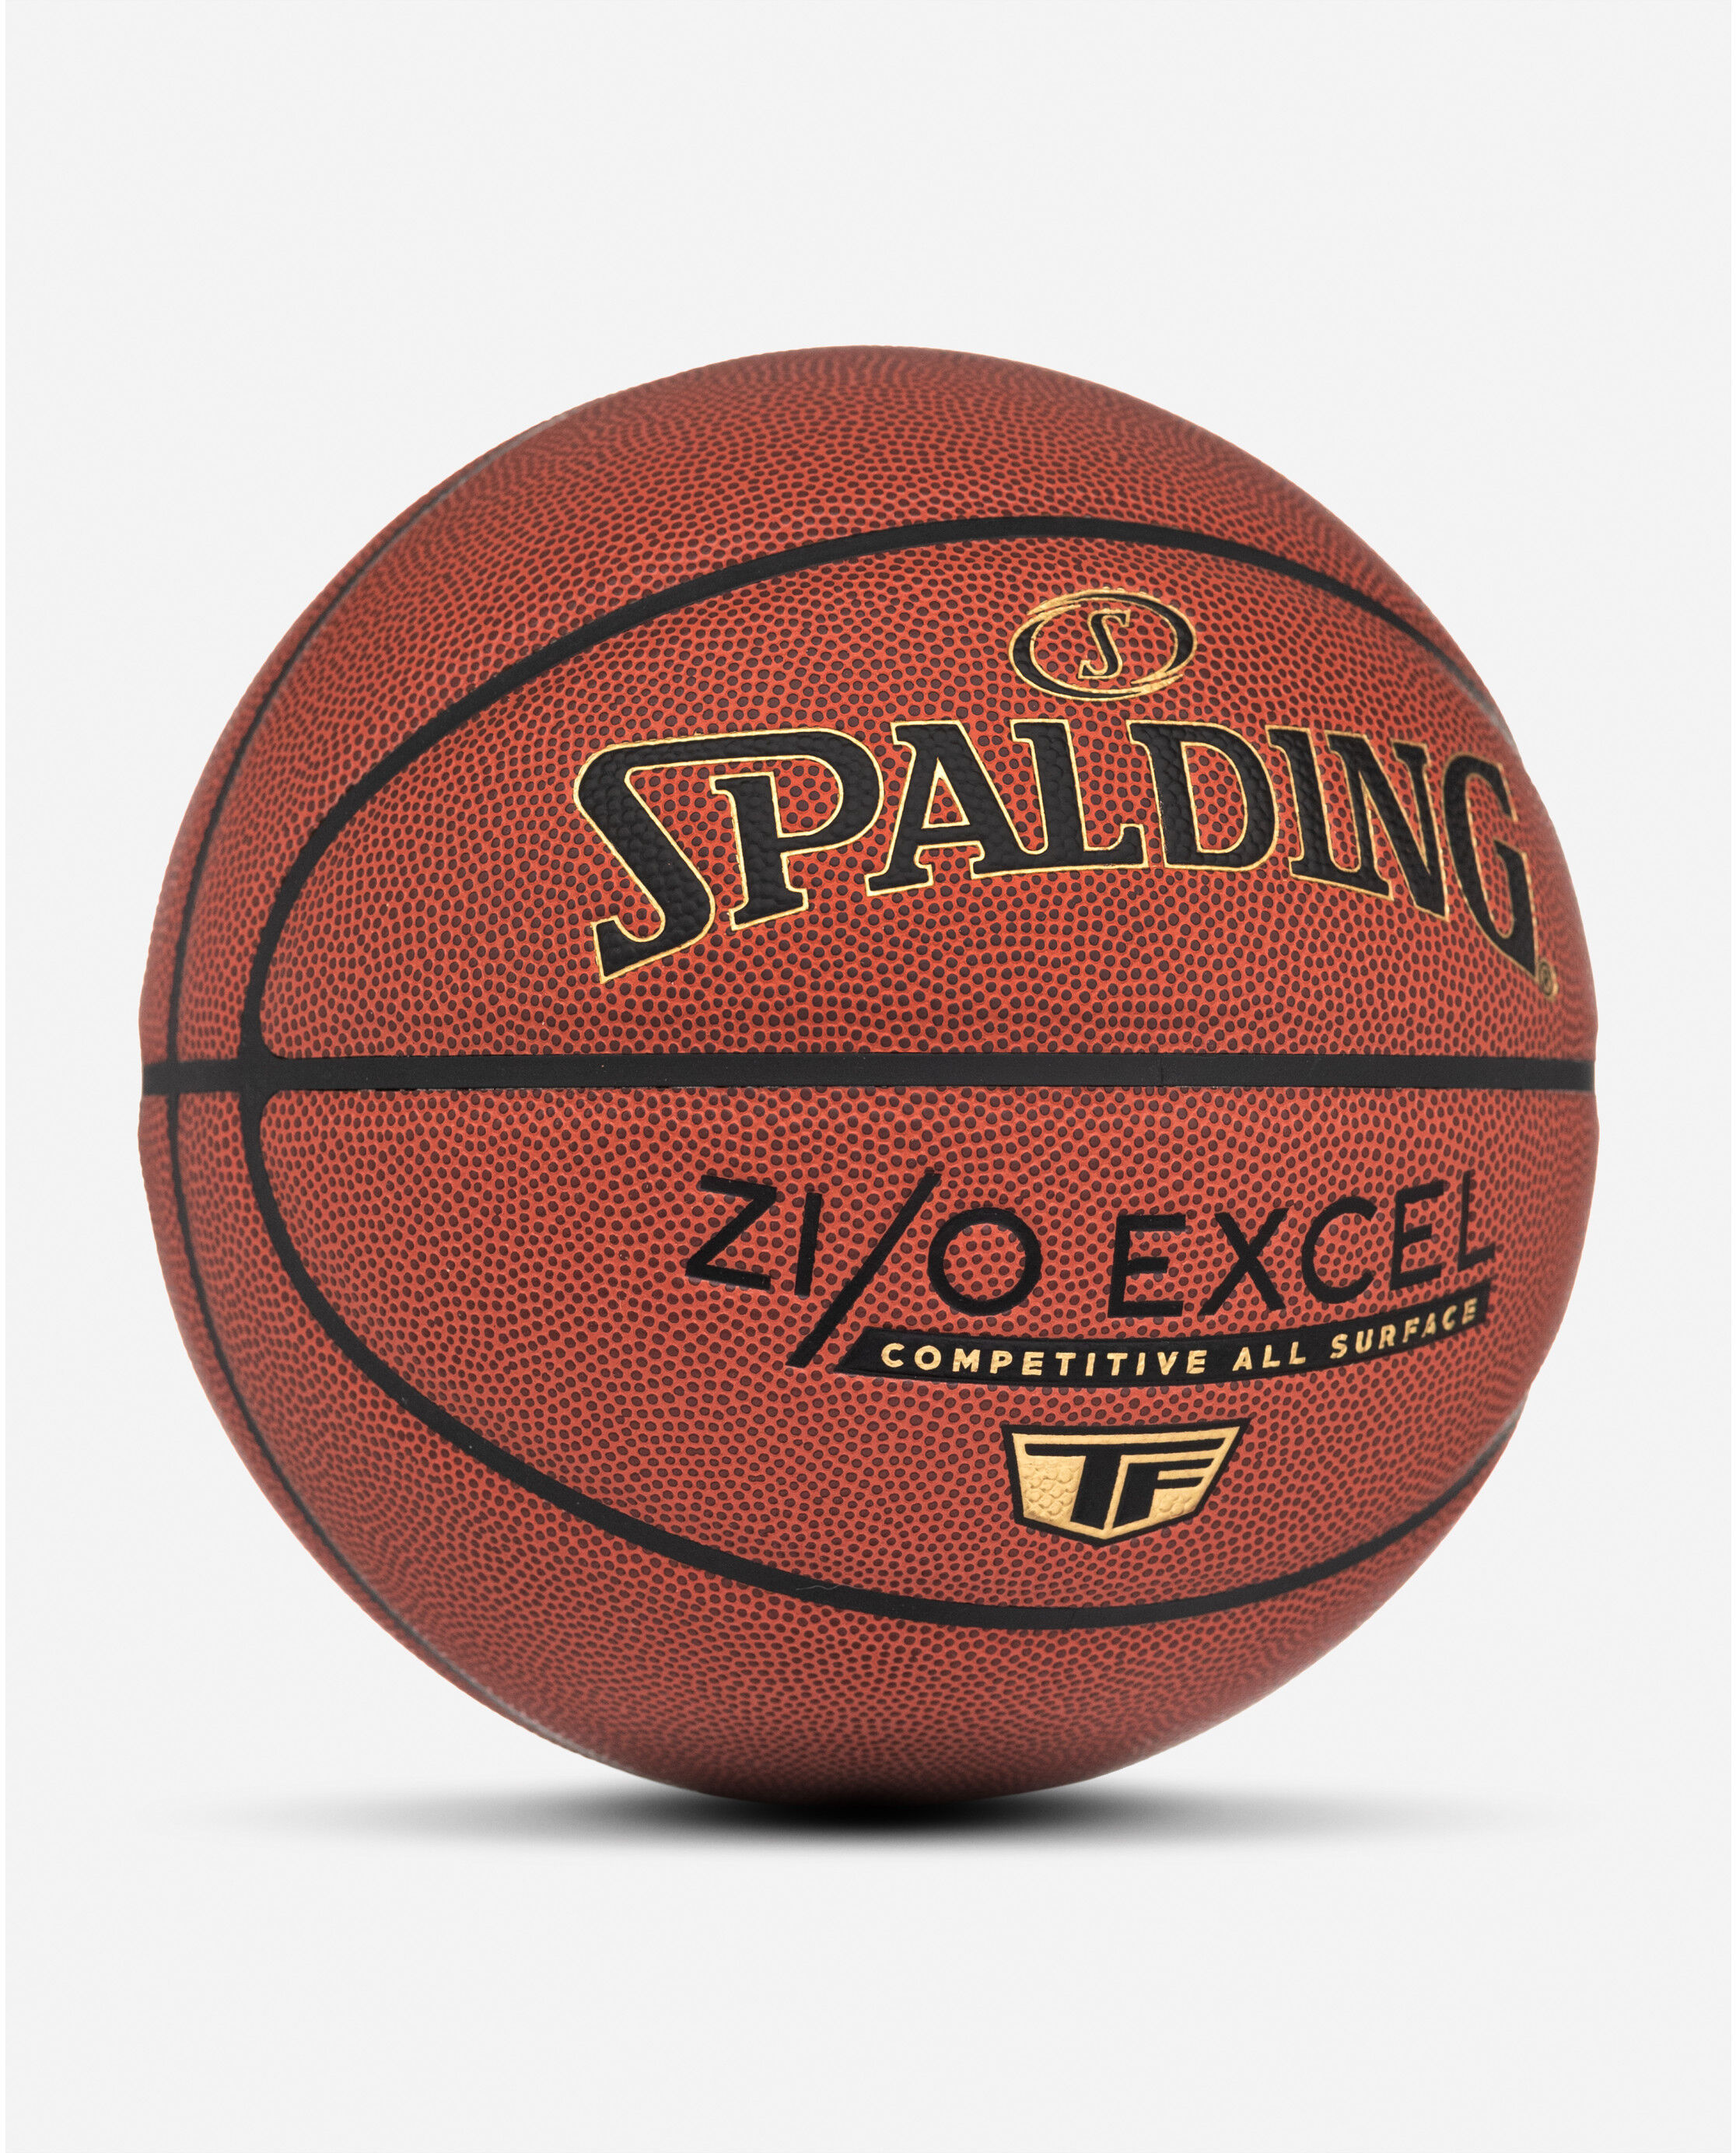 Spalding Zi/O Basketball 4 Count 